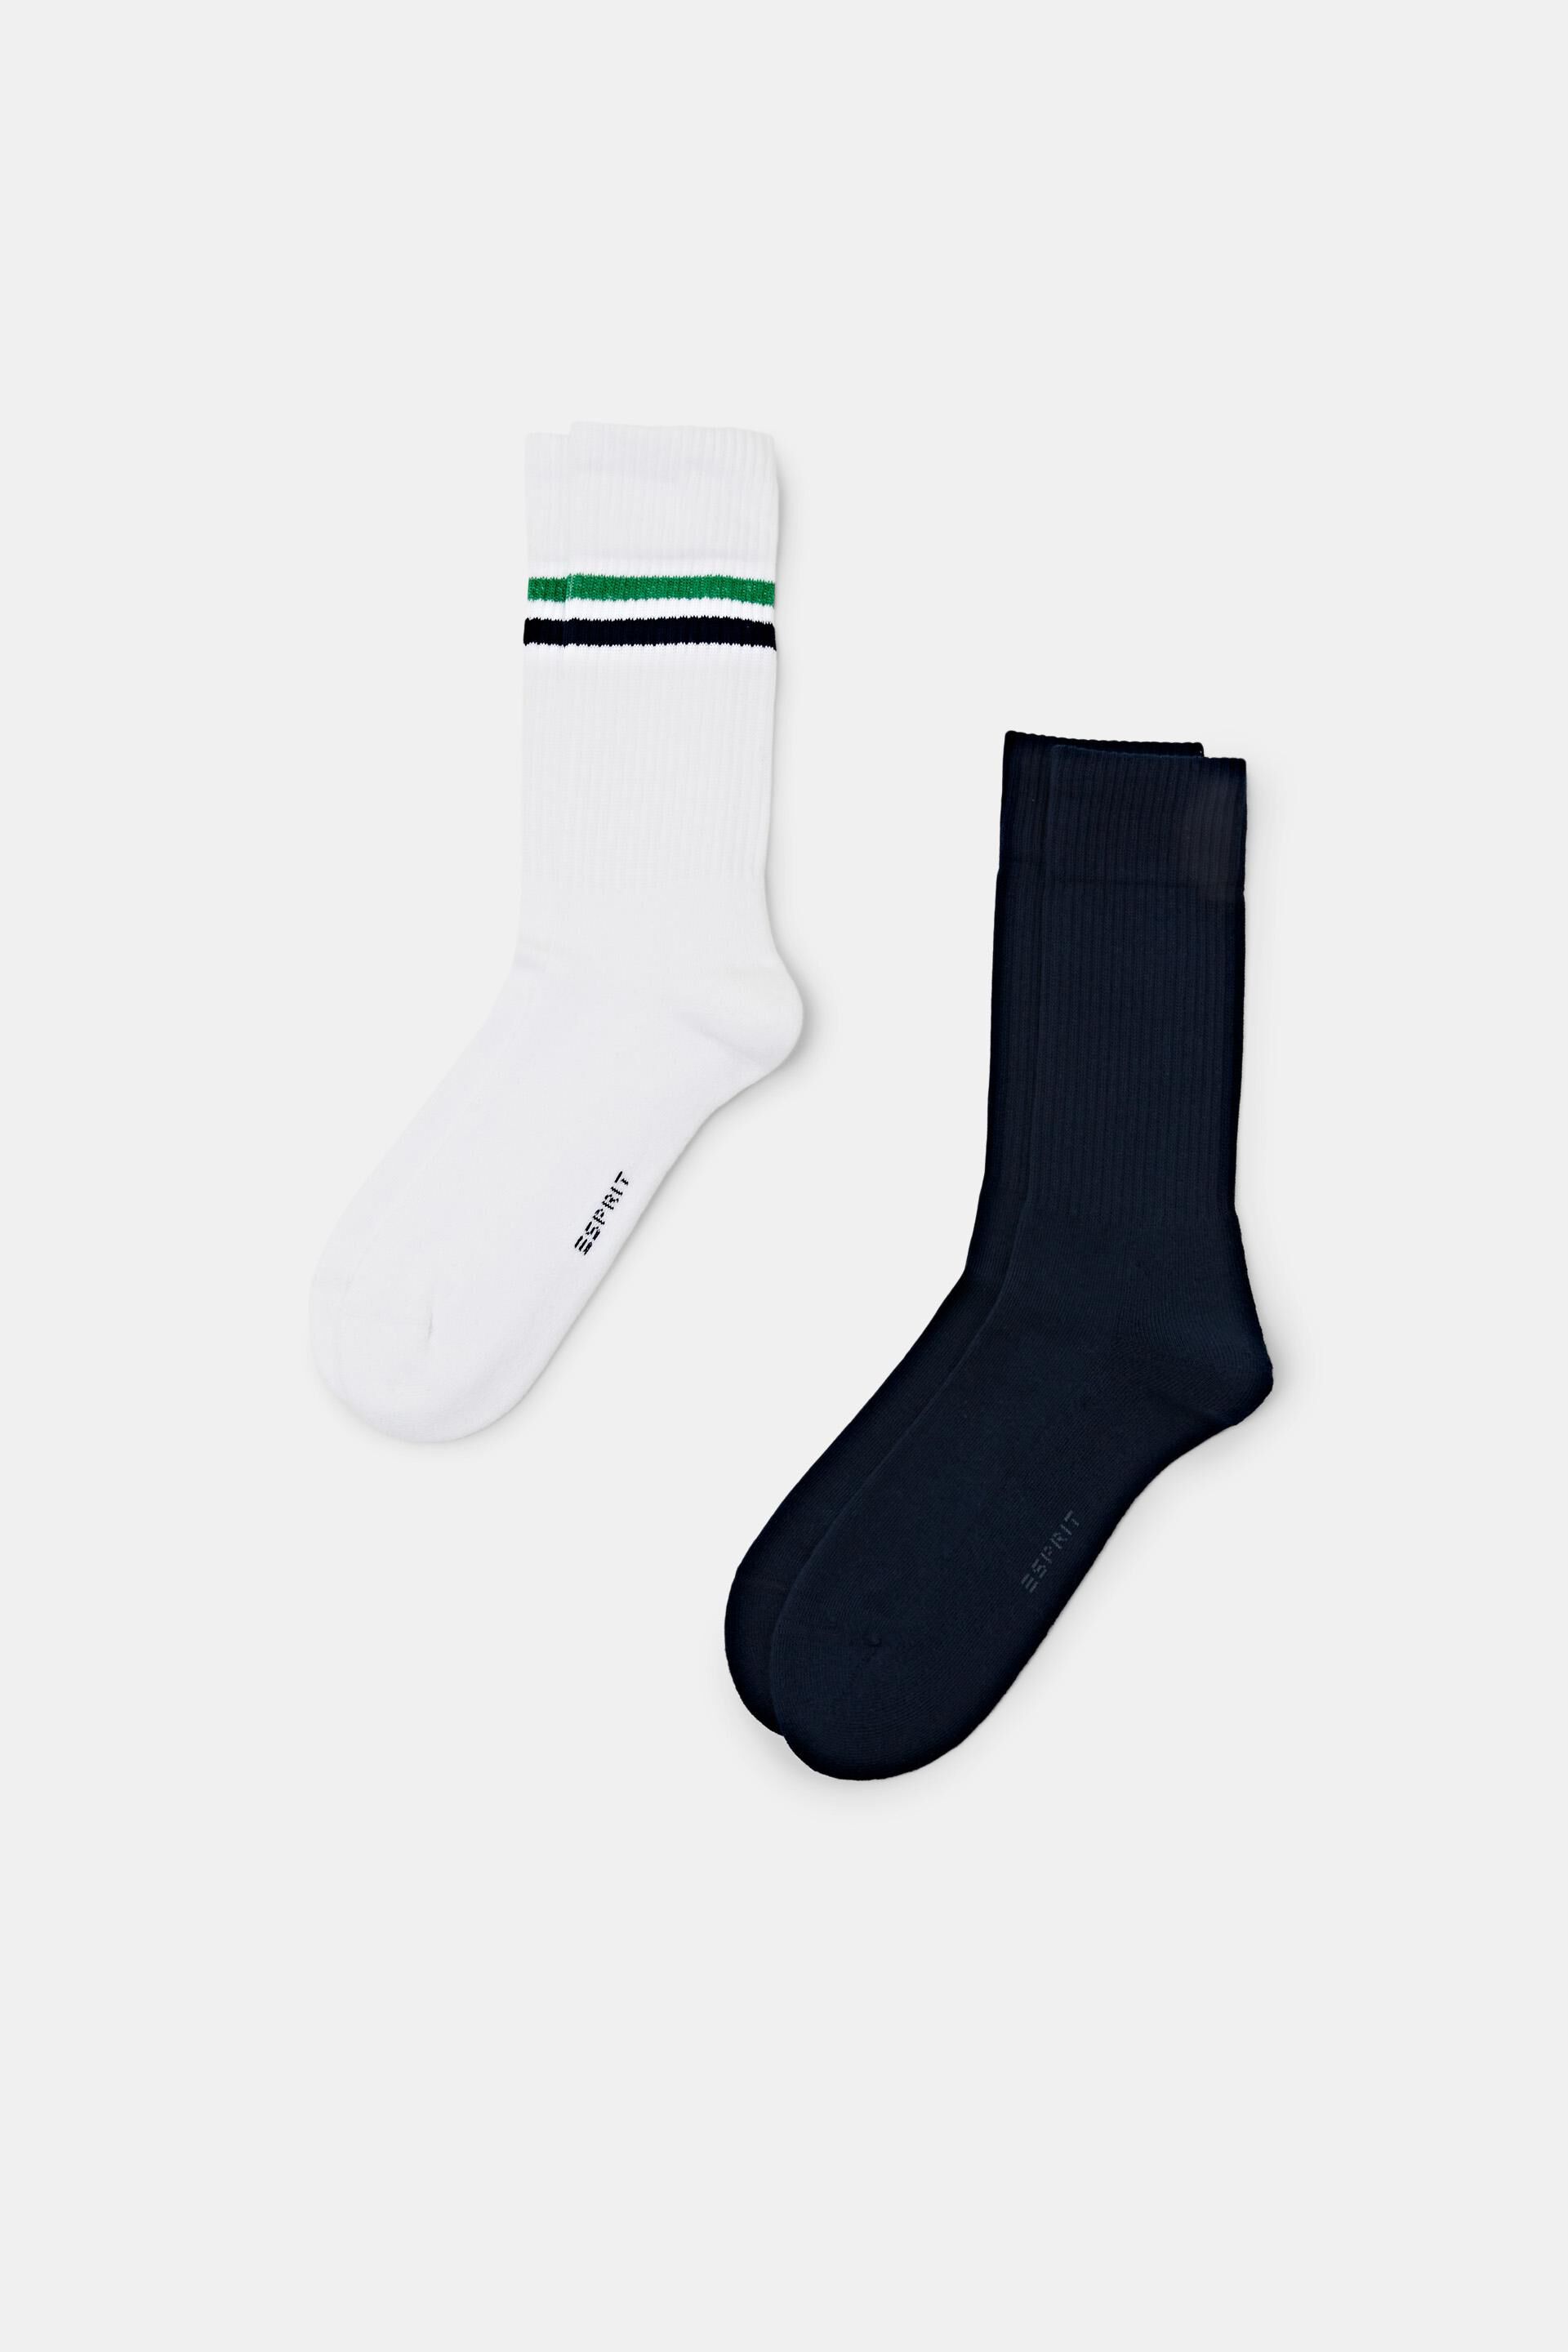 Esprit organic socks, 2-pack athletic cotton of